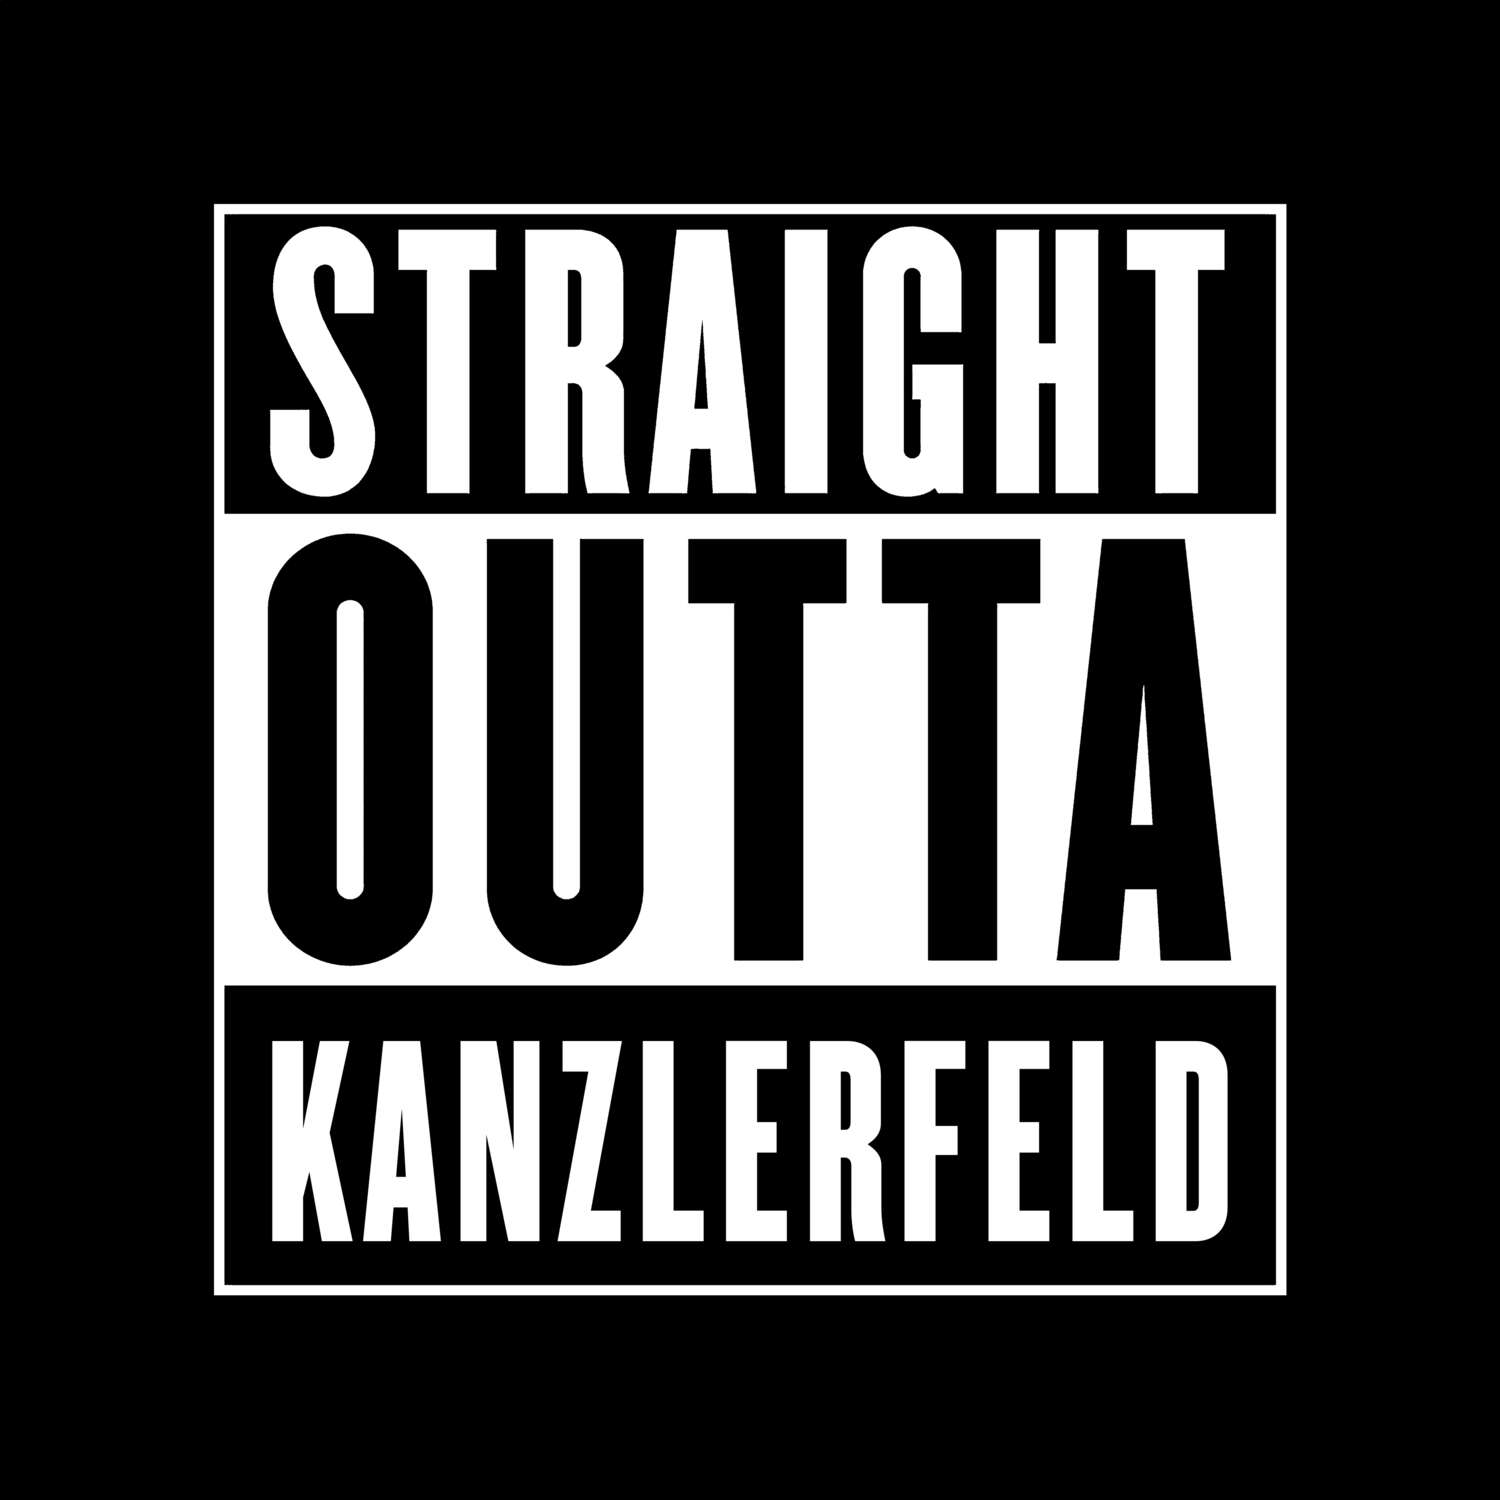 Kanzlerfeld T-Shirt »Straight Outta«